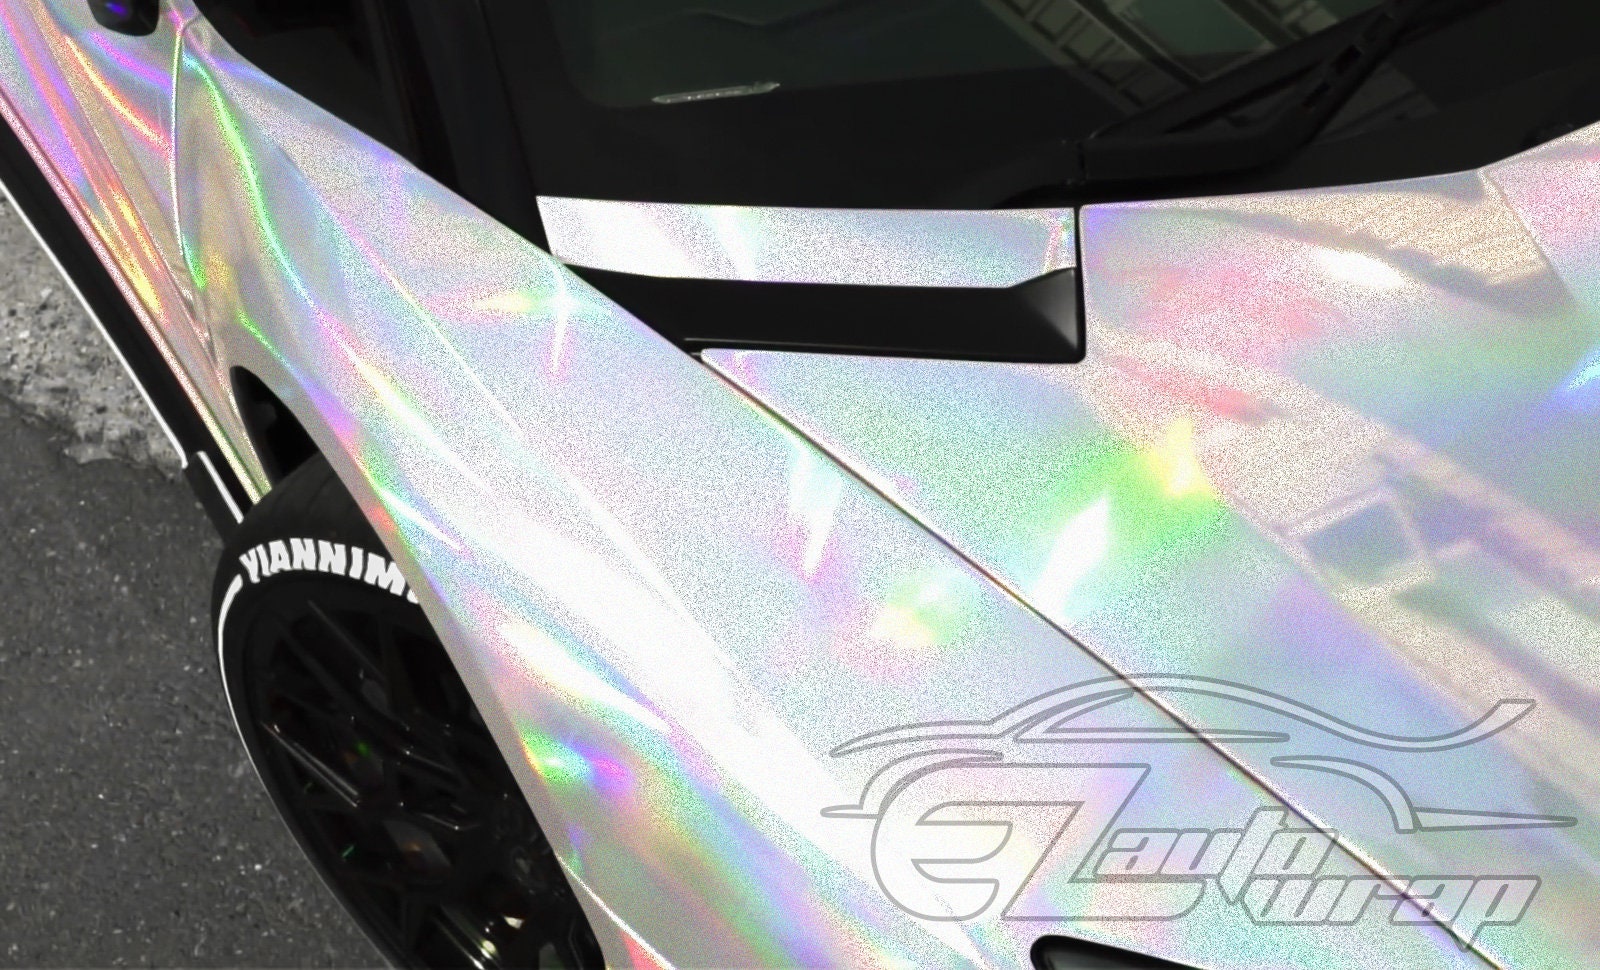 Gloss Silver Holographic Rainbow Vinyl Car Wrap Auto Decal Sticker Film Roll